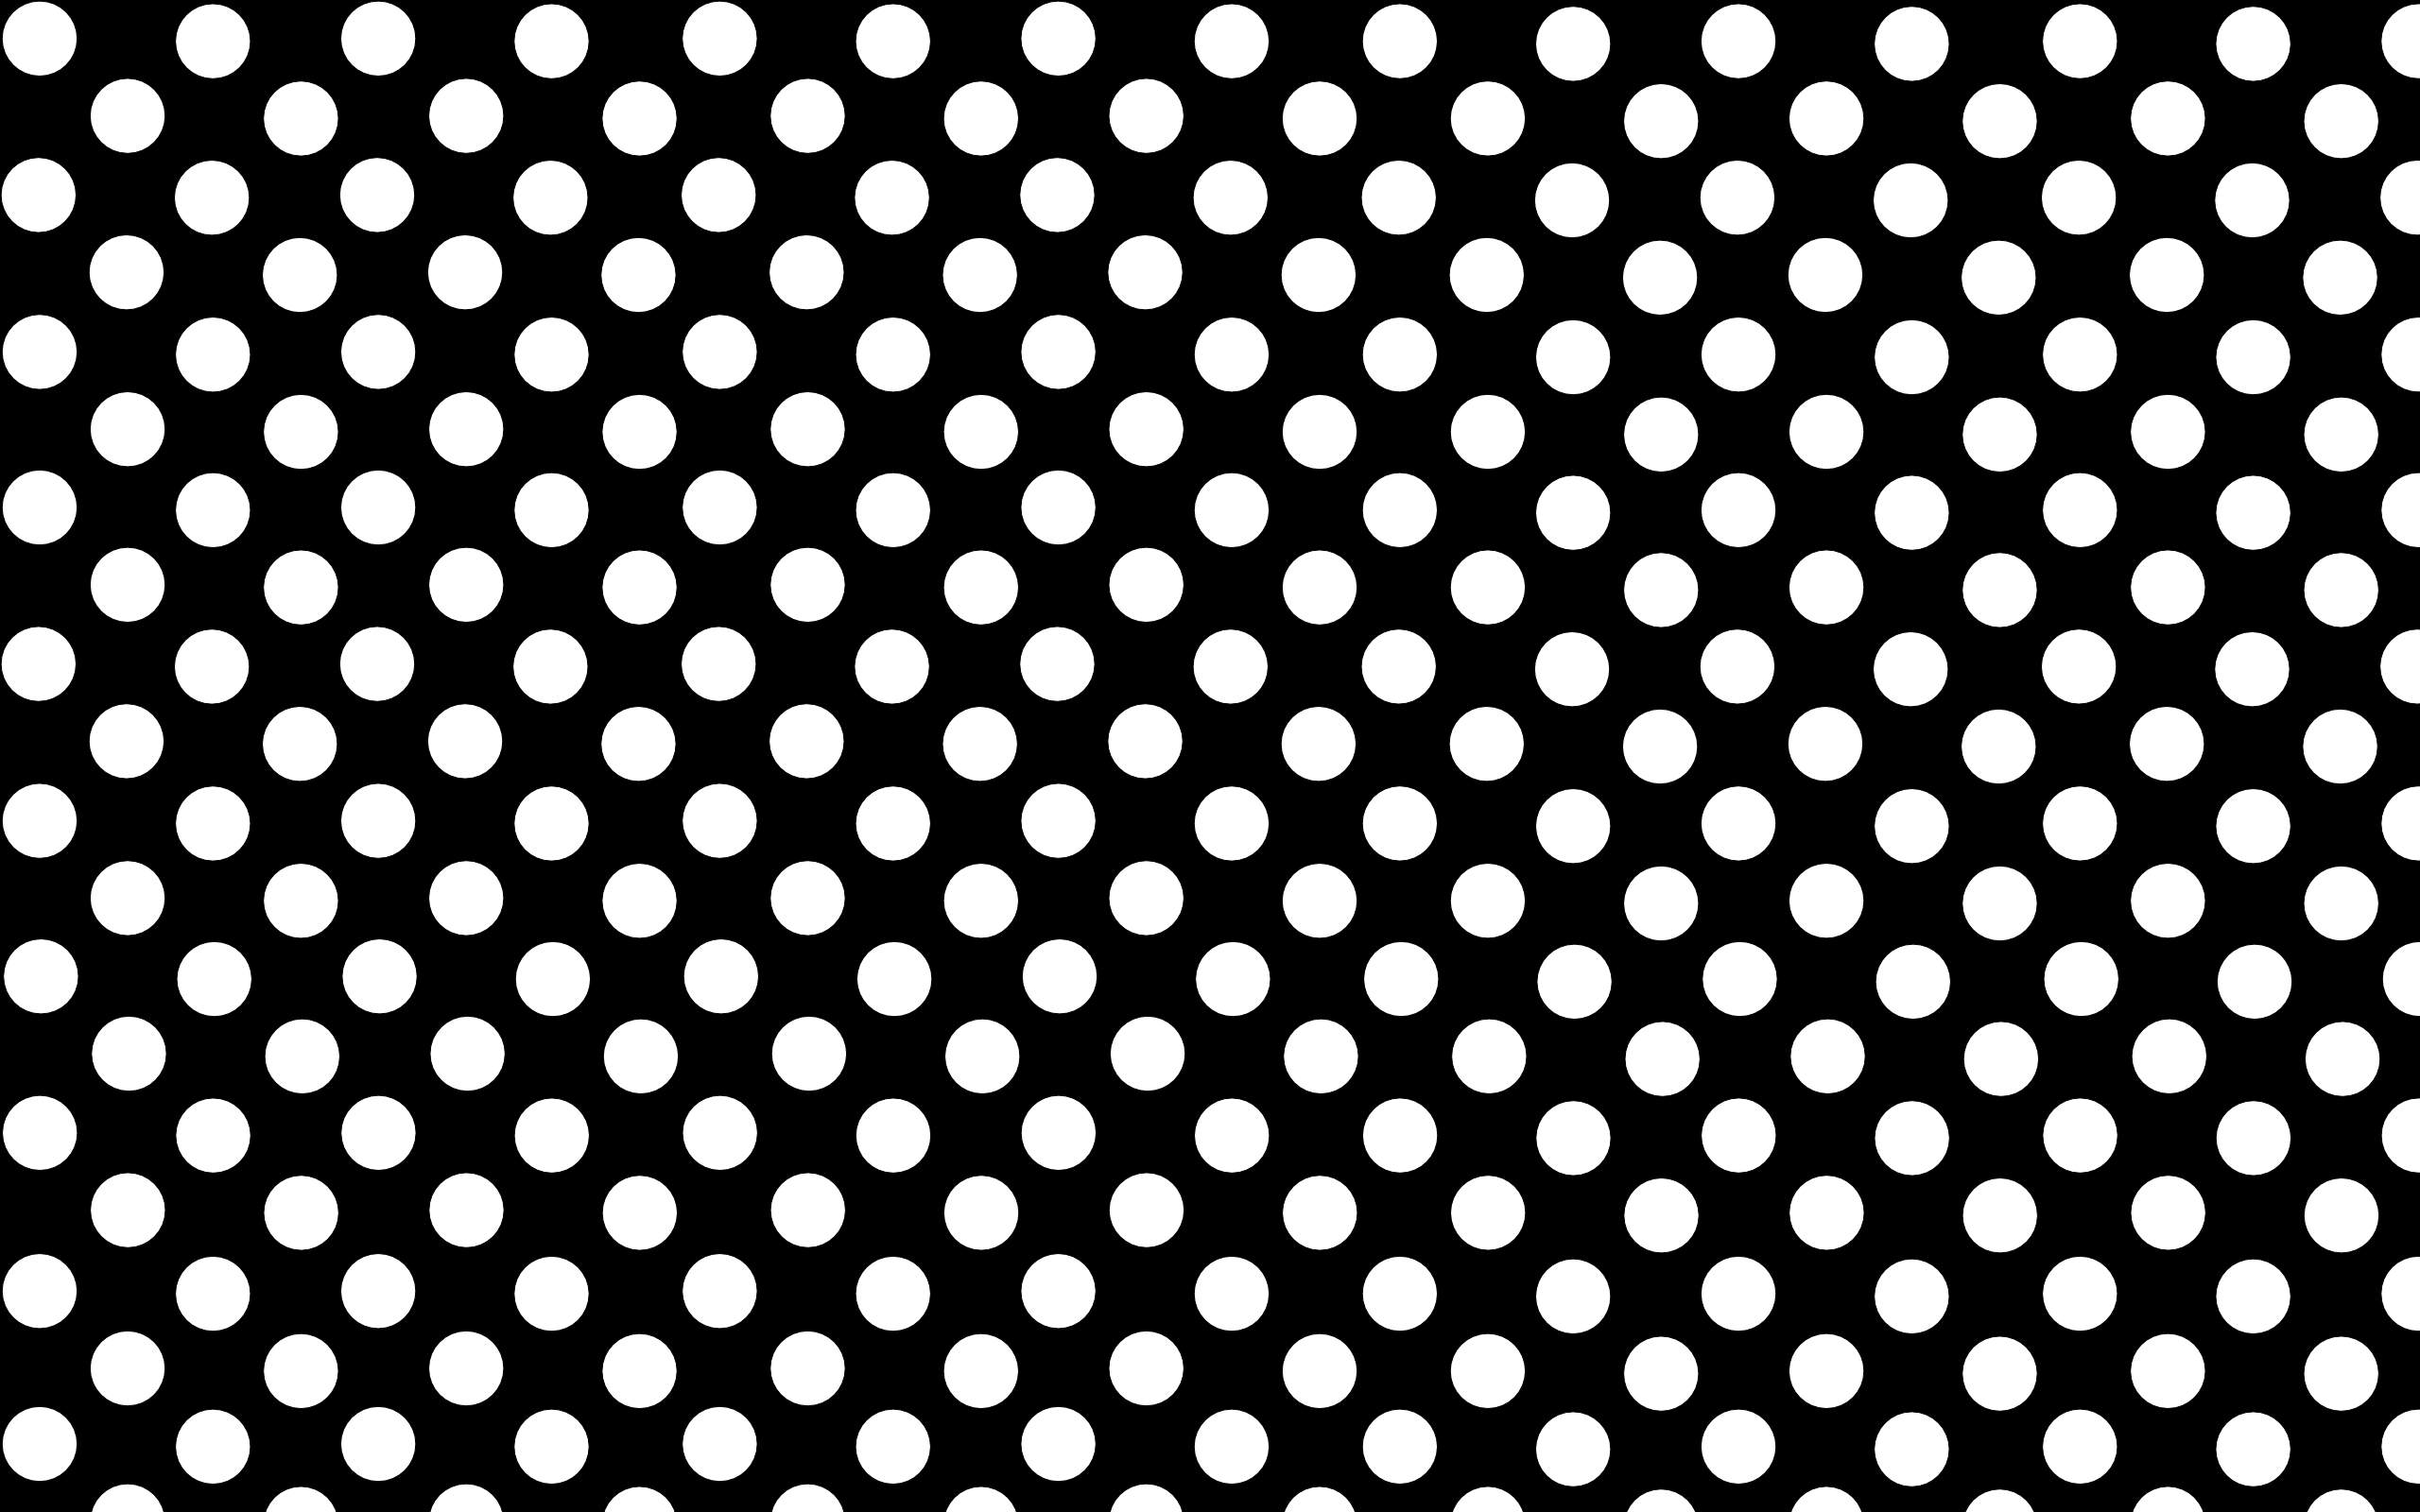 Black And White Polka Dot Wallpaper - Wallpapers HD Fine